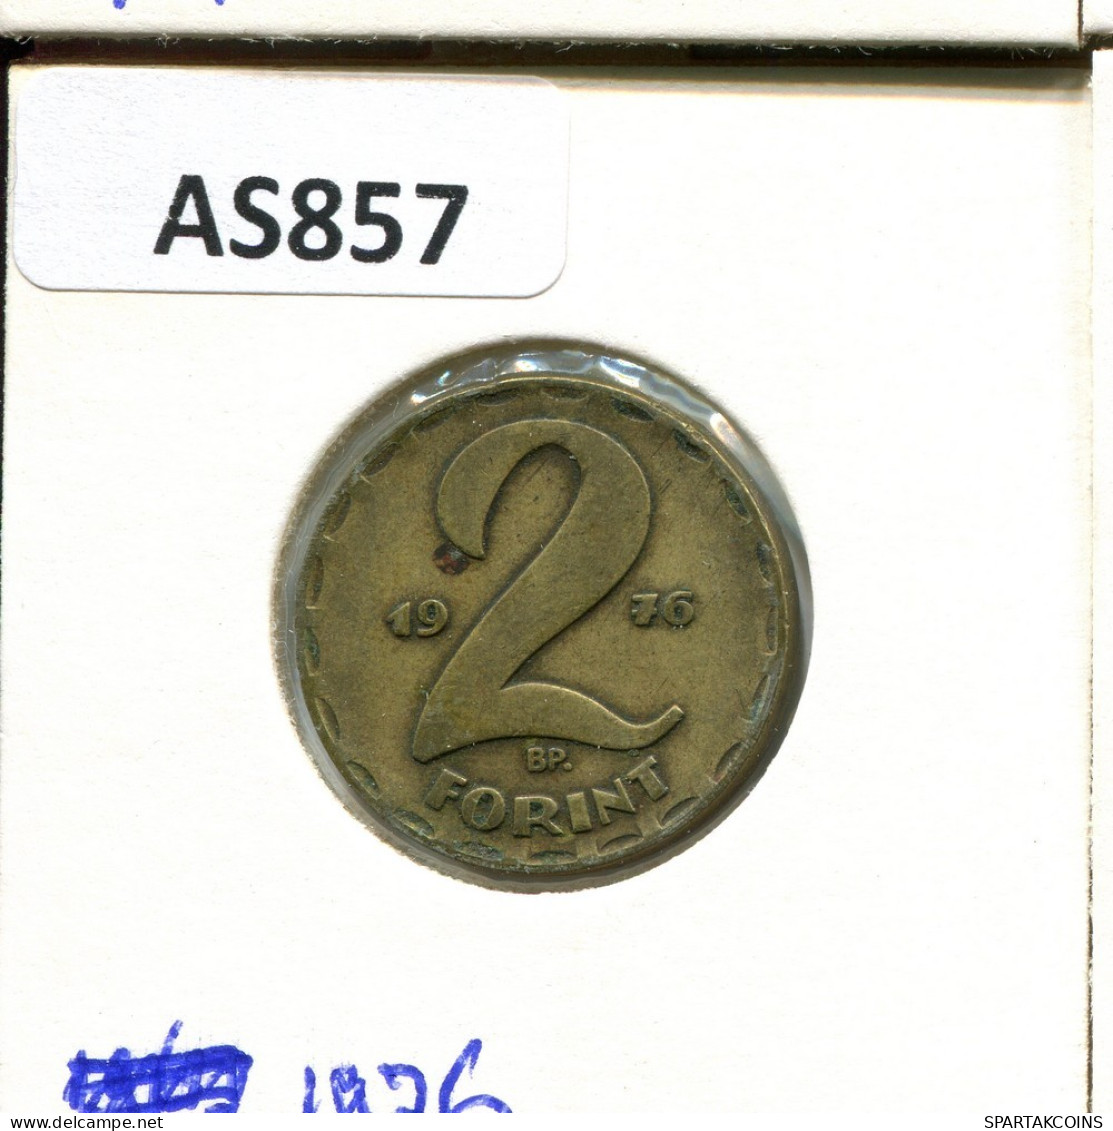 2 FORINT 1976 HUNGARY Coin #AS857.U.A - Hongrie